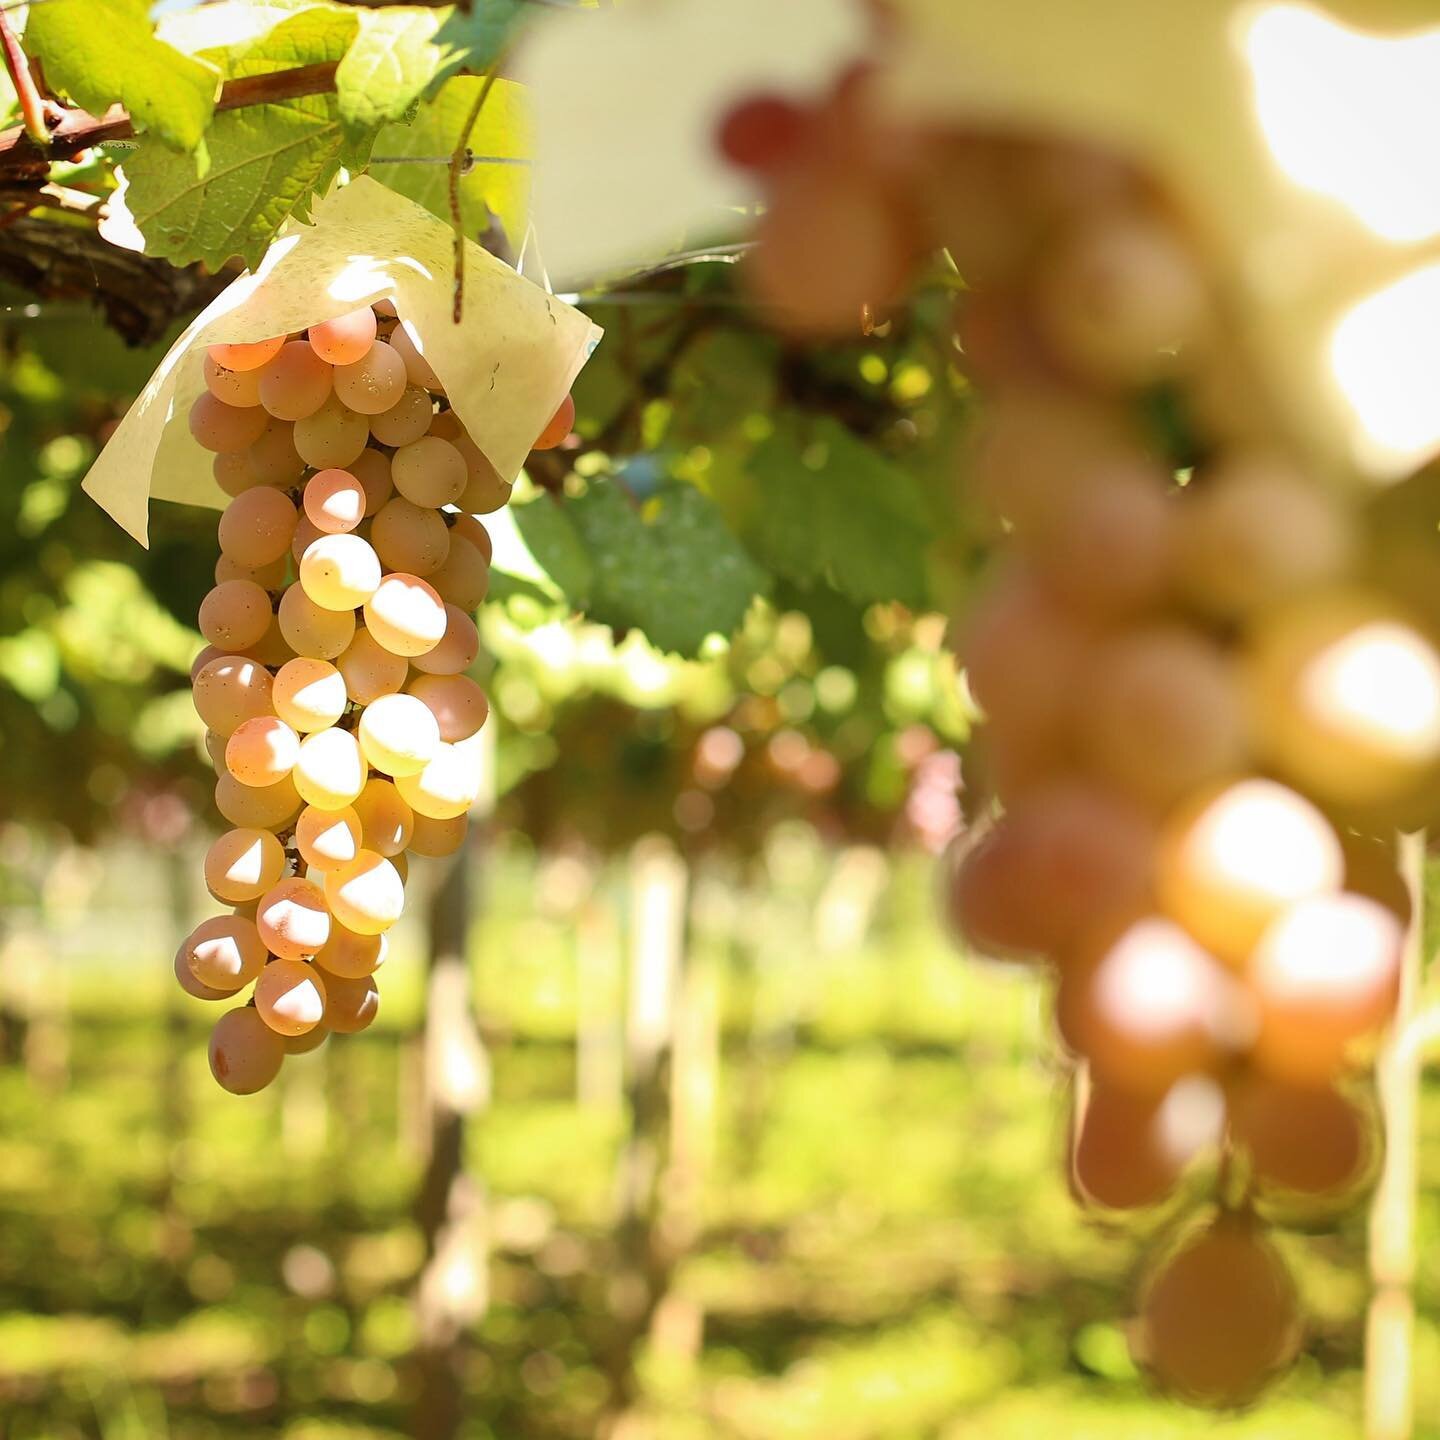 After a long, hot summer, the #Koshu grapes are ripening beautifully.
.
.
.
#japanesewine #koshuwine #viticulture #koshuvalley #vineyard #vignoble #winecountry #wineregion #pergola #grapevine #grapegrowing #winegeek #wineadventures  #terroir #winelov